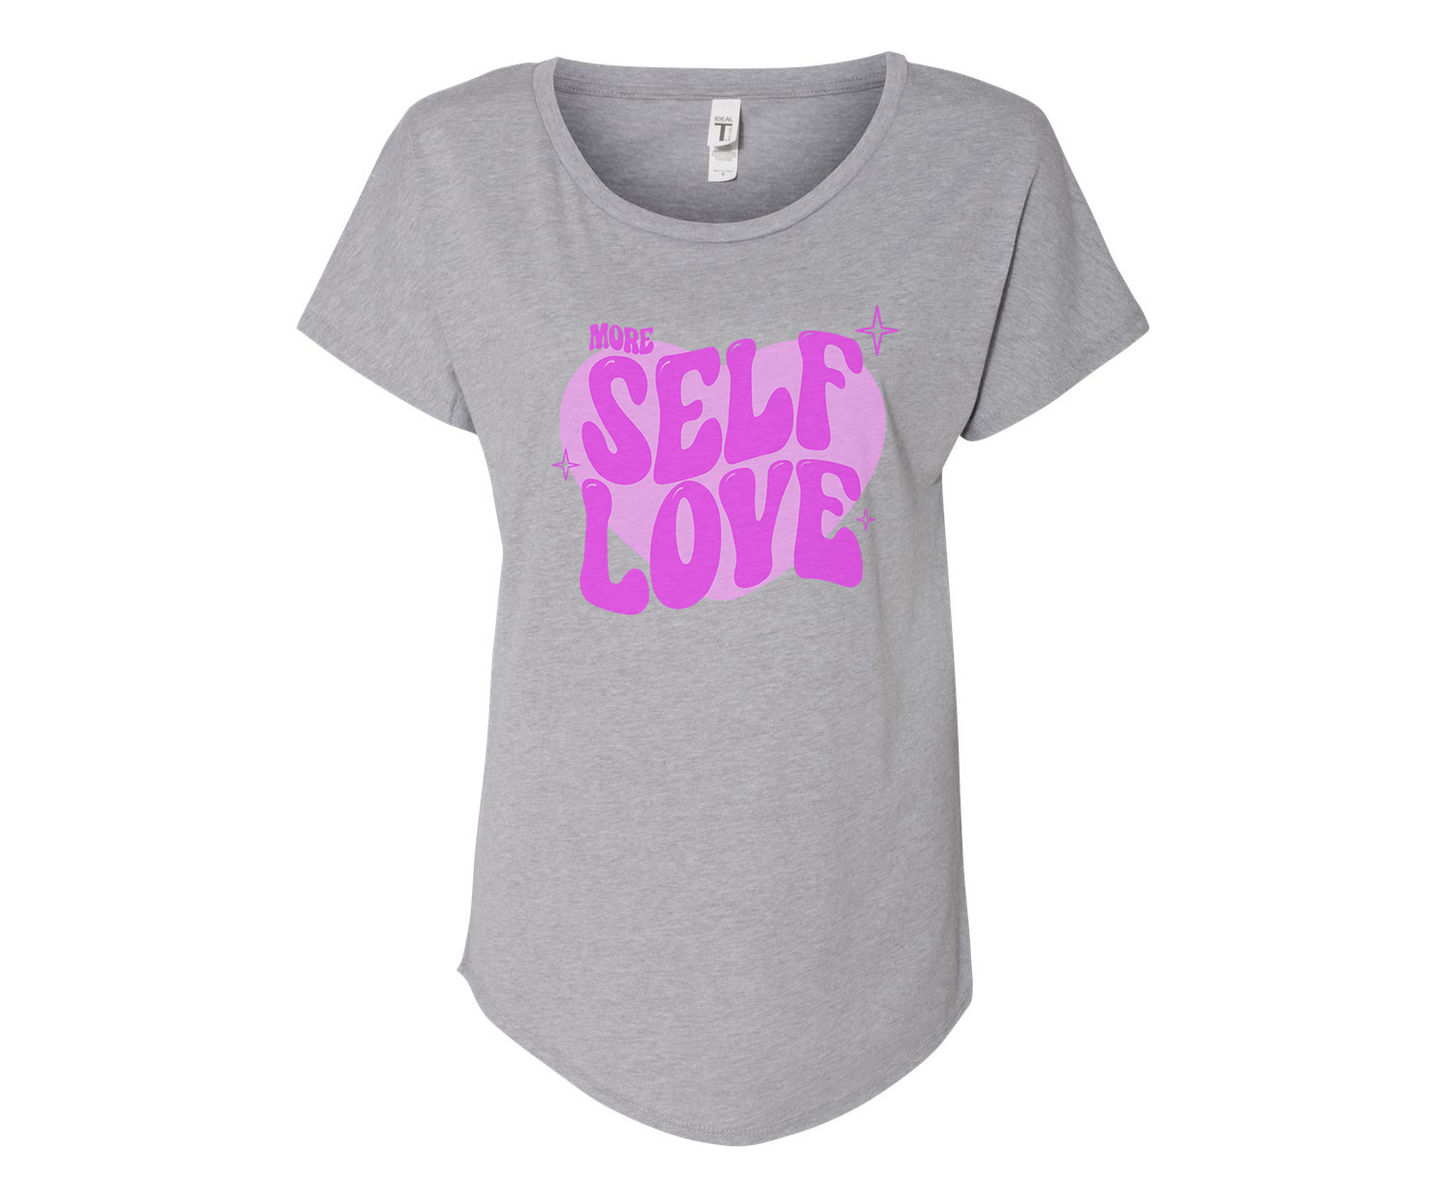 More Self Love Heart Ladies Tee Shirt - In Grey & White